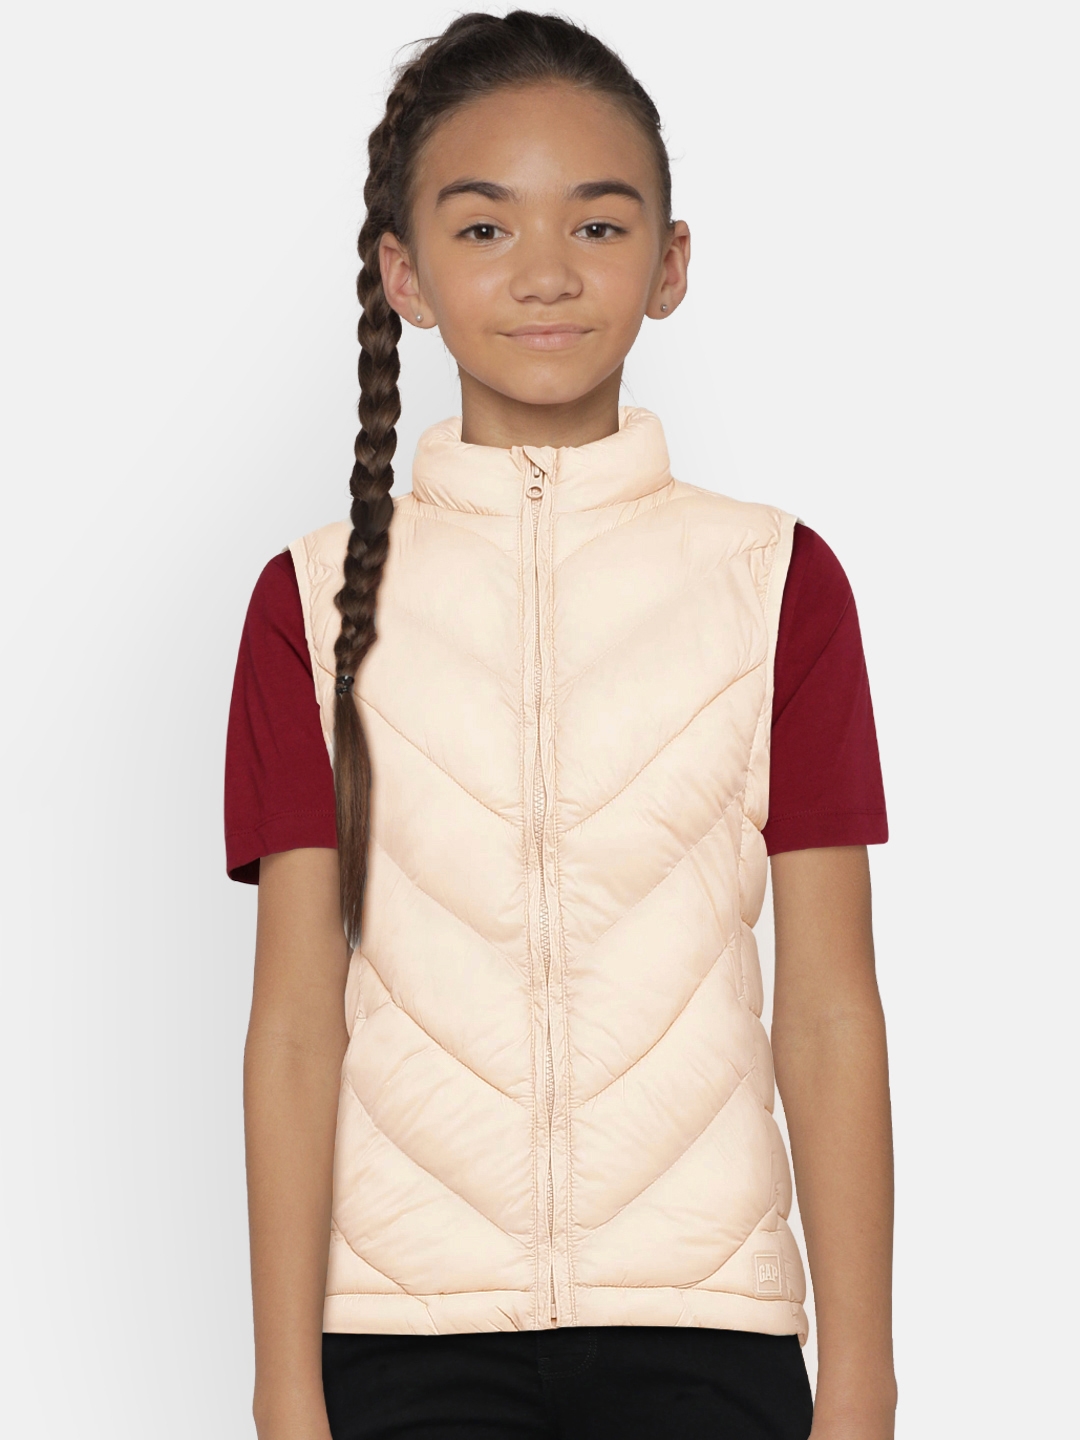 gap girls vest